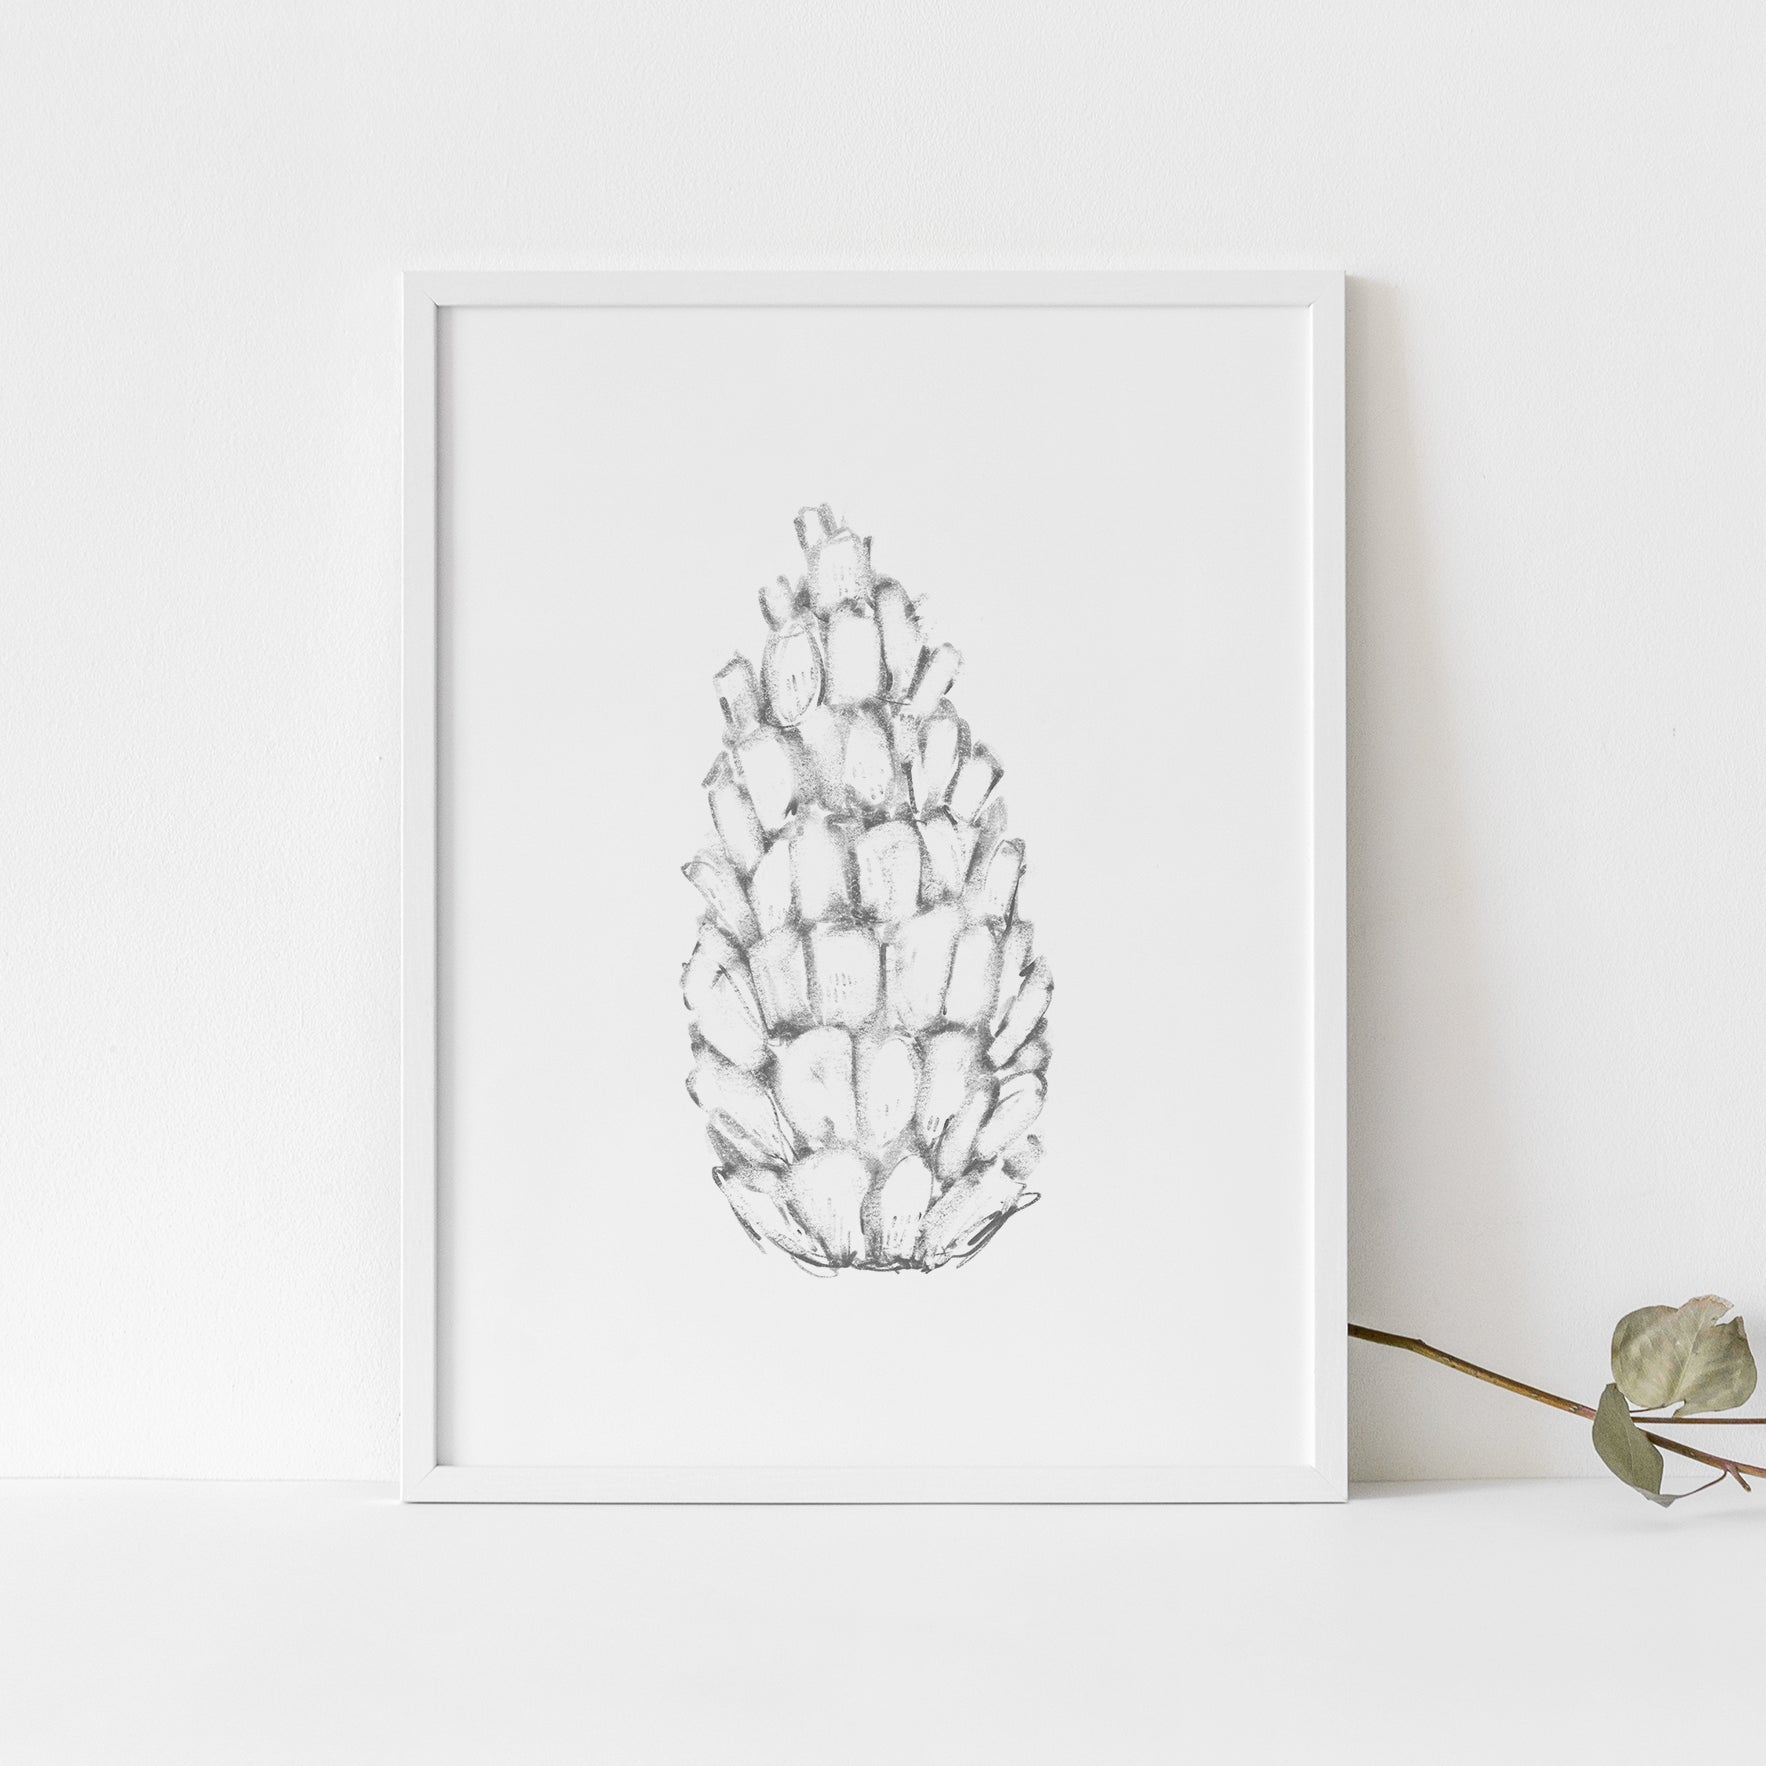 pine cone design